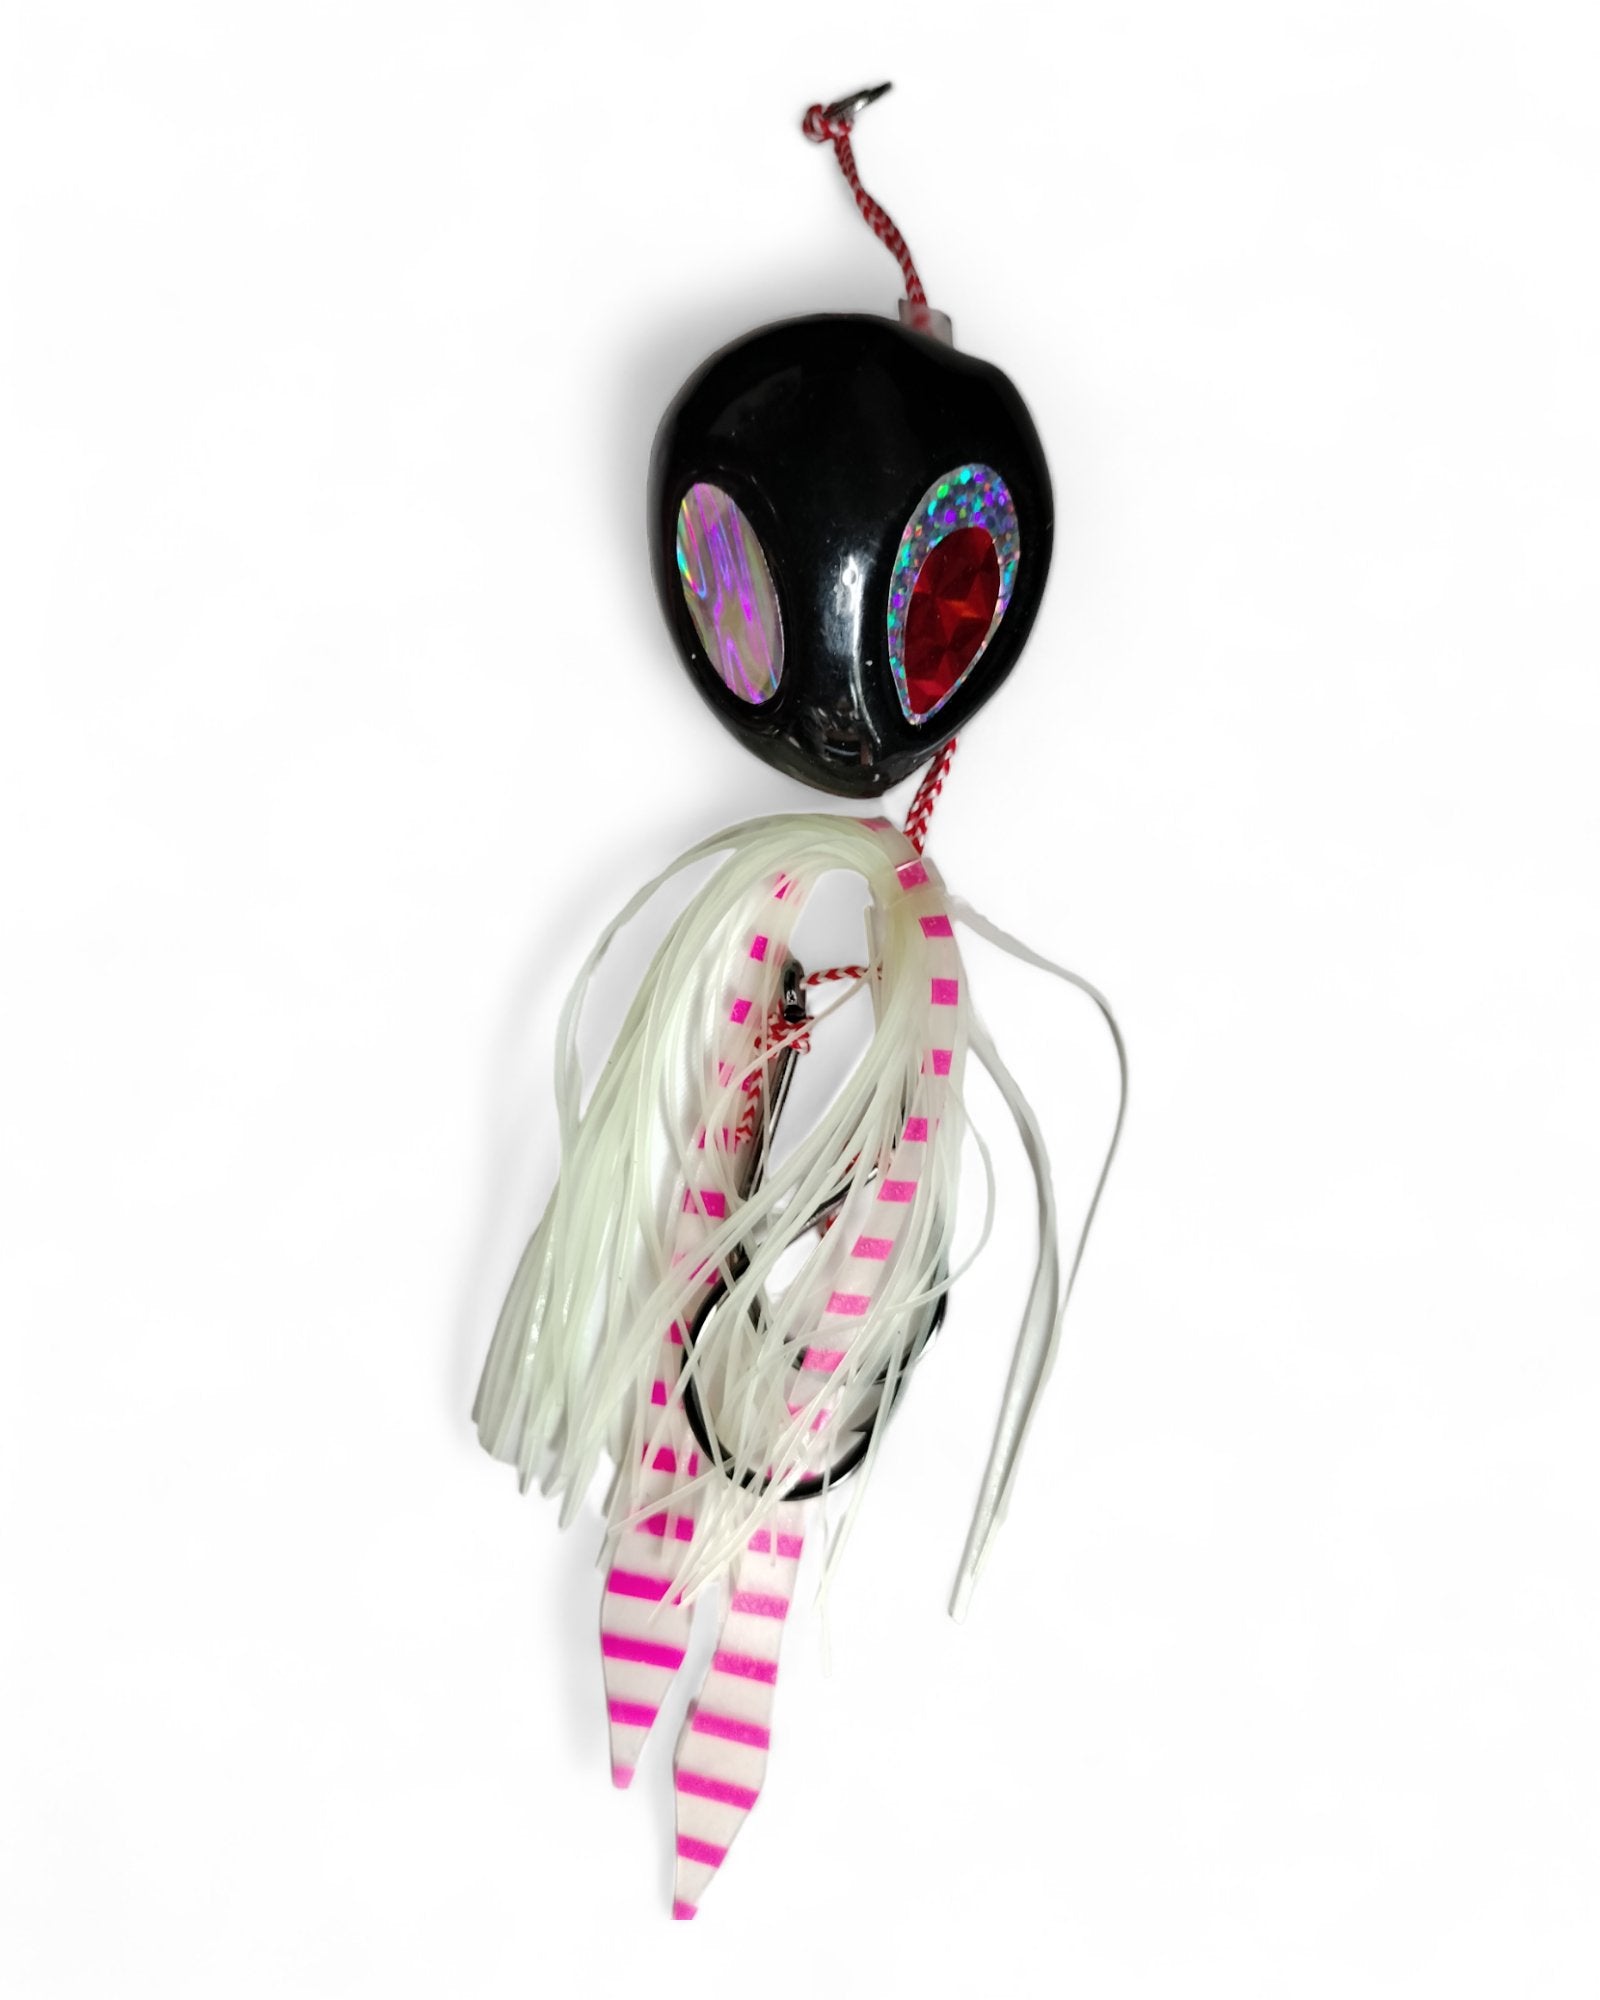 The Juicy Alien Kabura with BKK Hook - Gr8nzlife